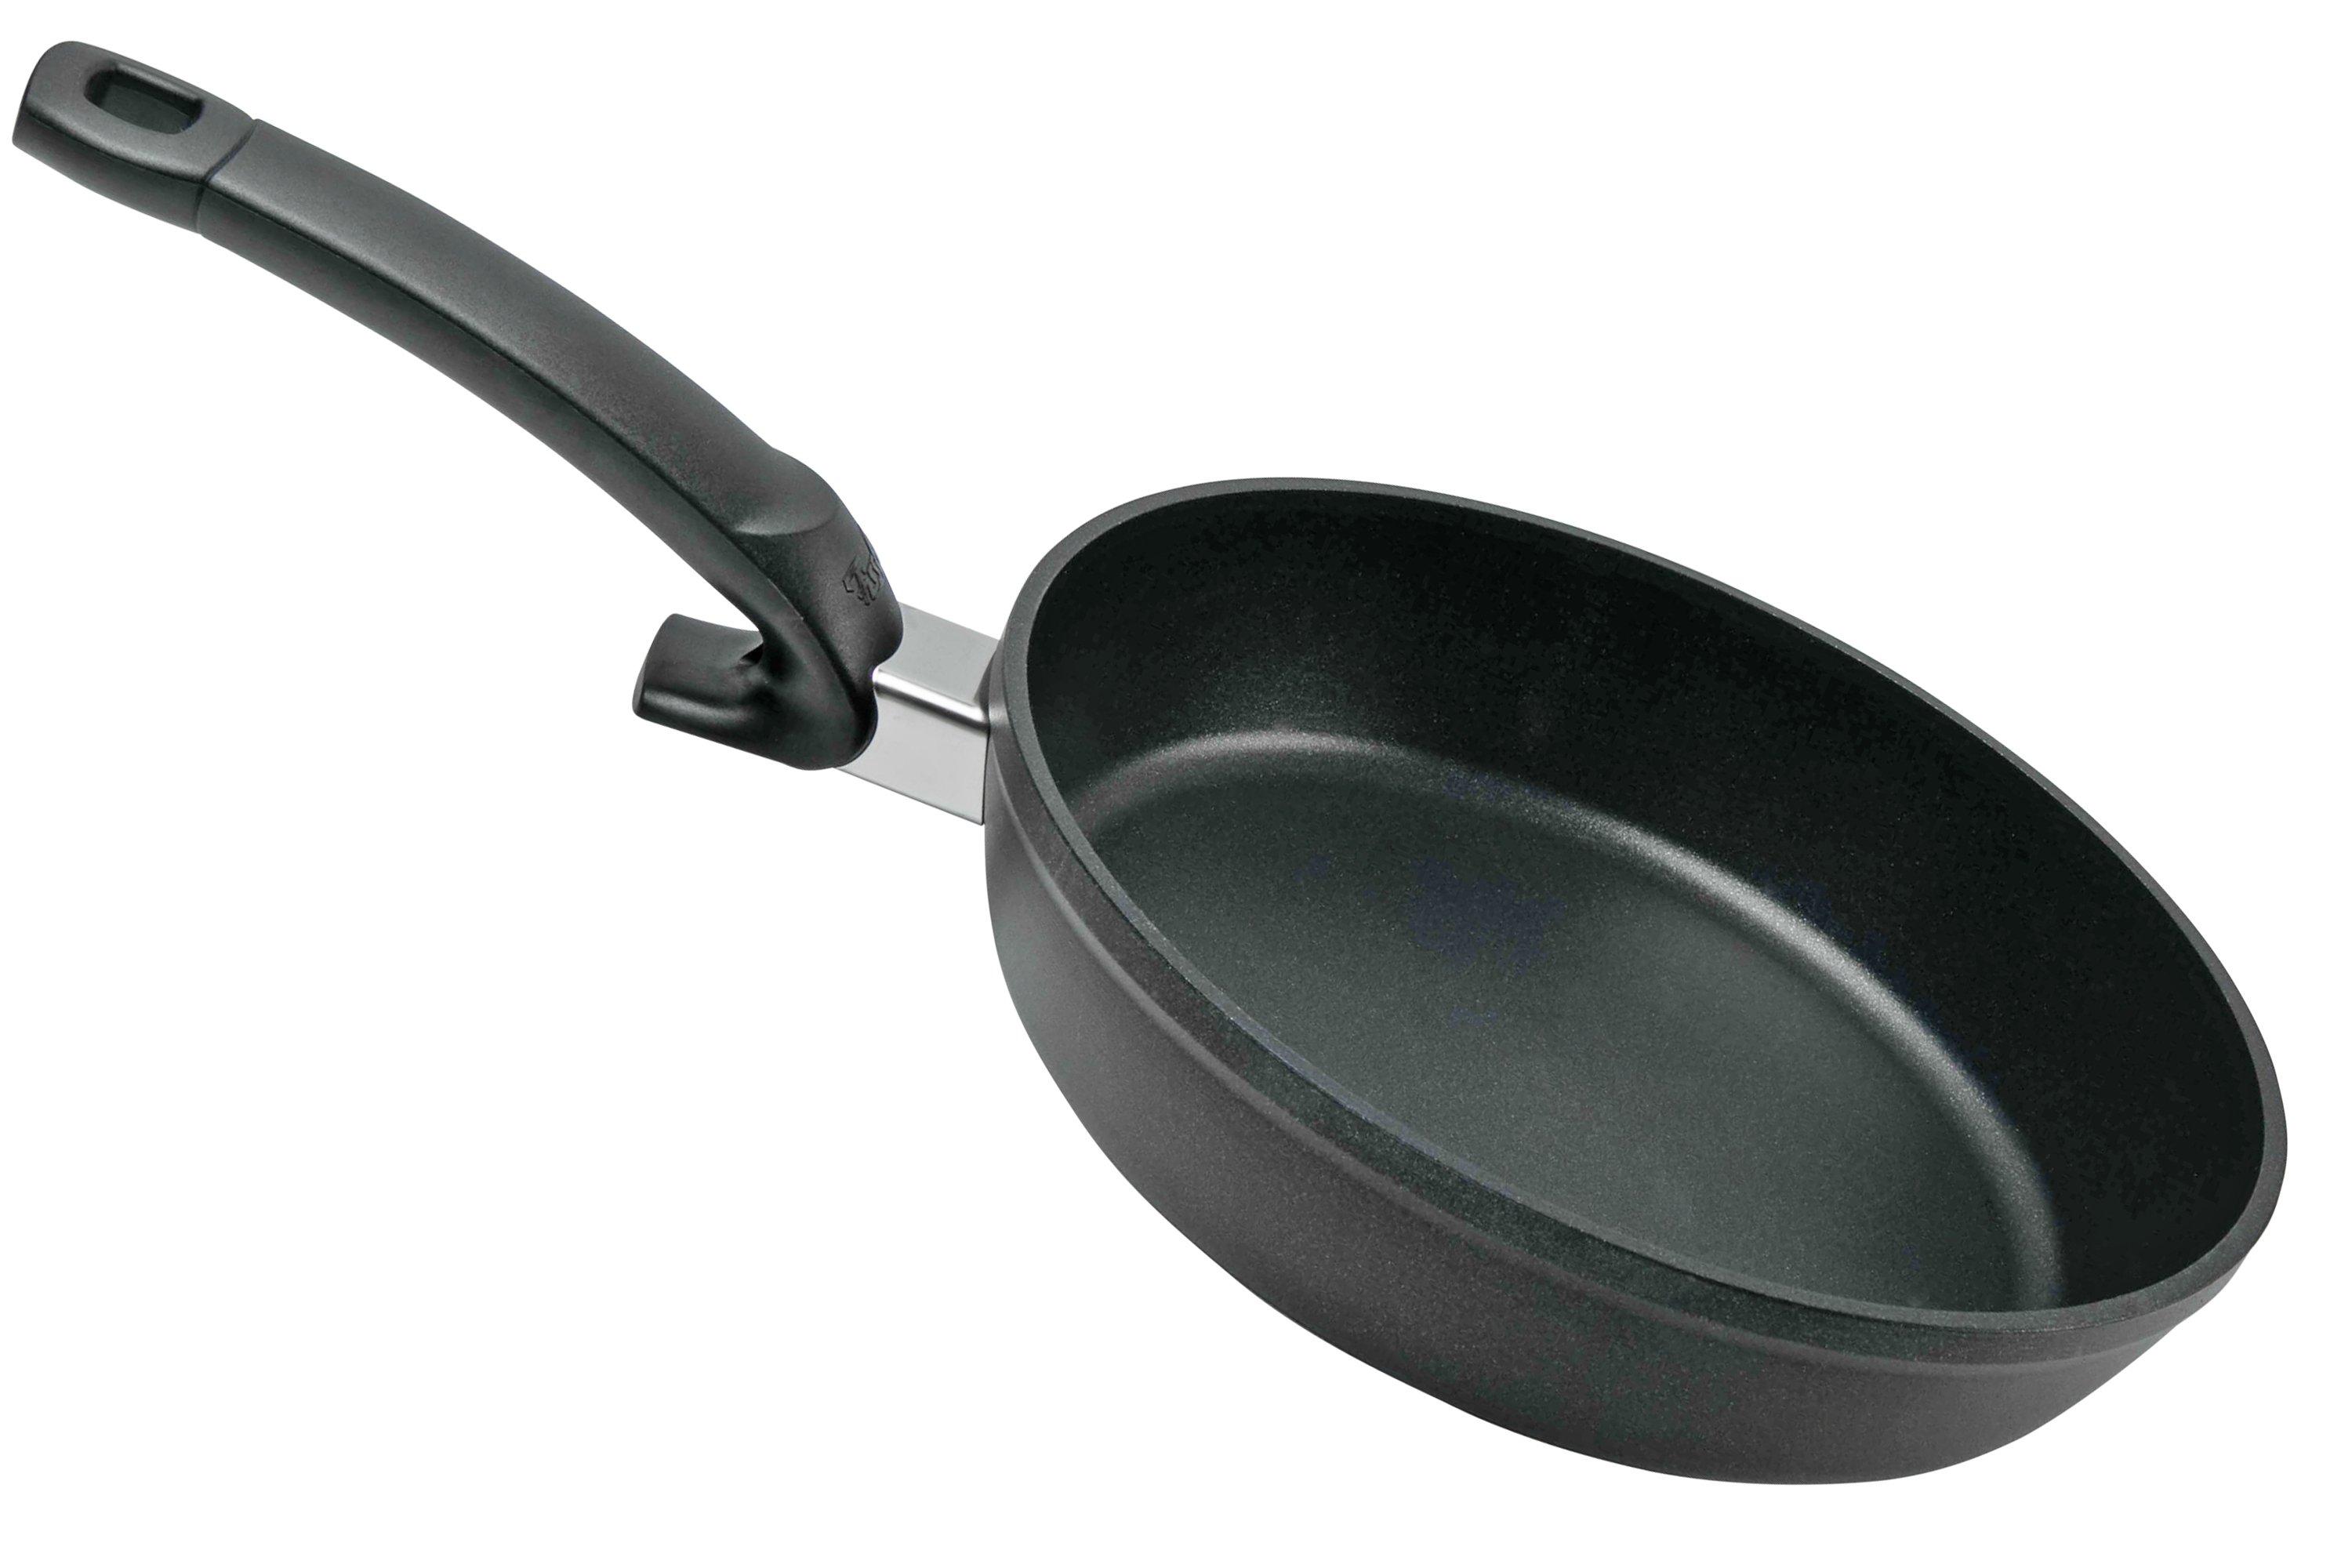 Fissler Levital Comfort 159-121-24-100-0 frying pan 24 cm | Advantageously  shopping at